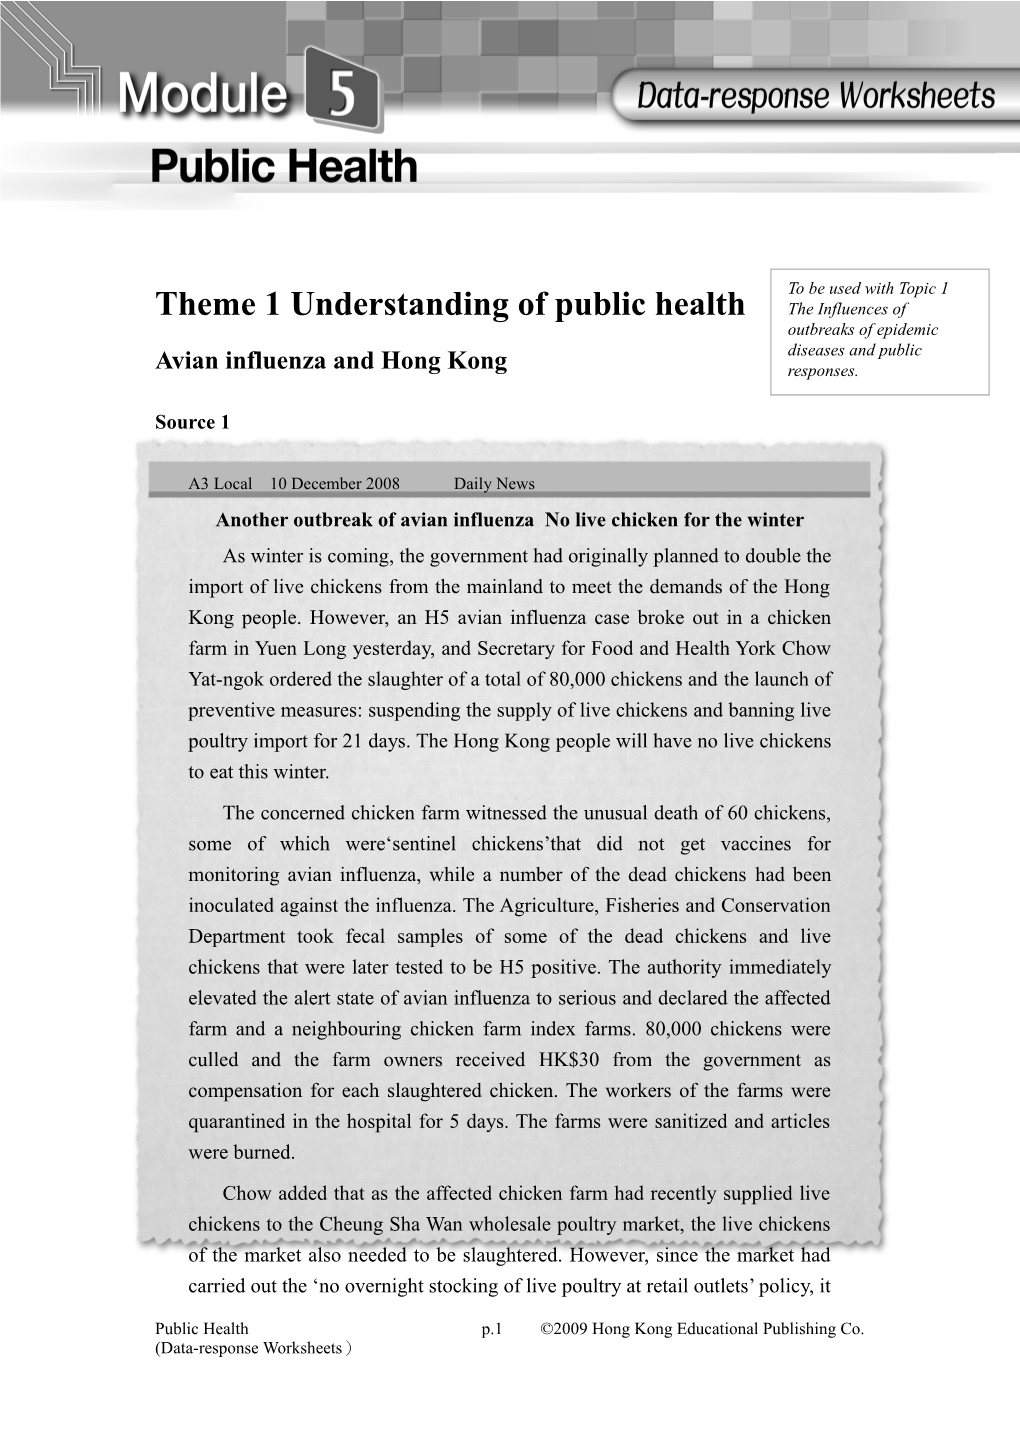 Theme 1 Understanding of Public Health